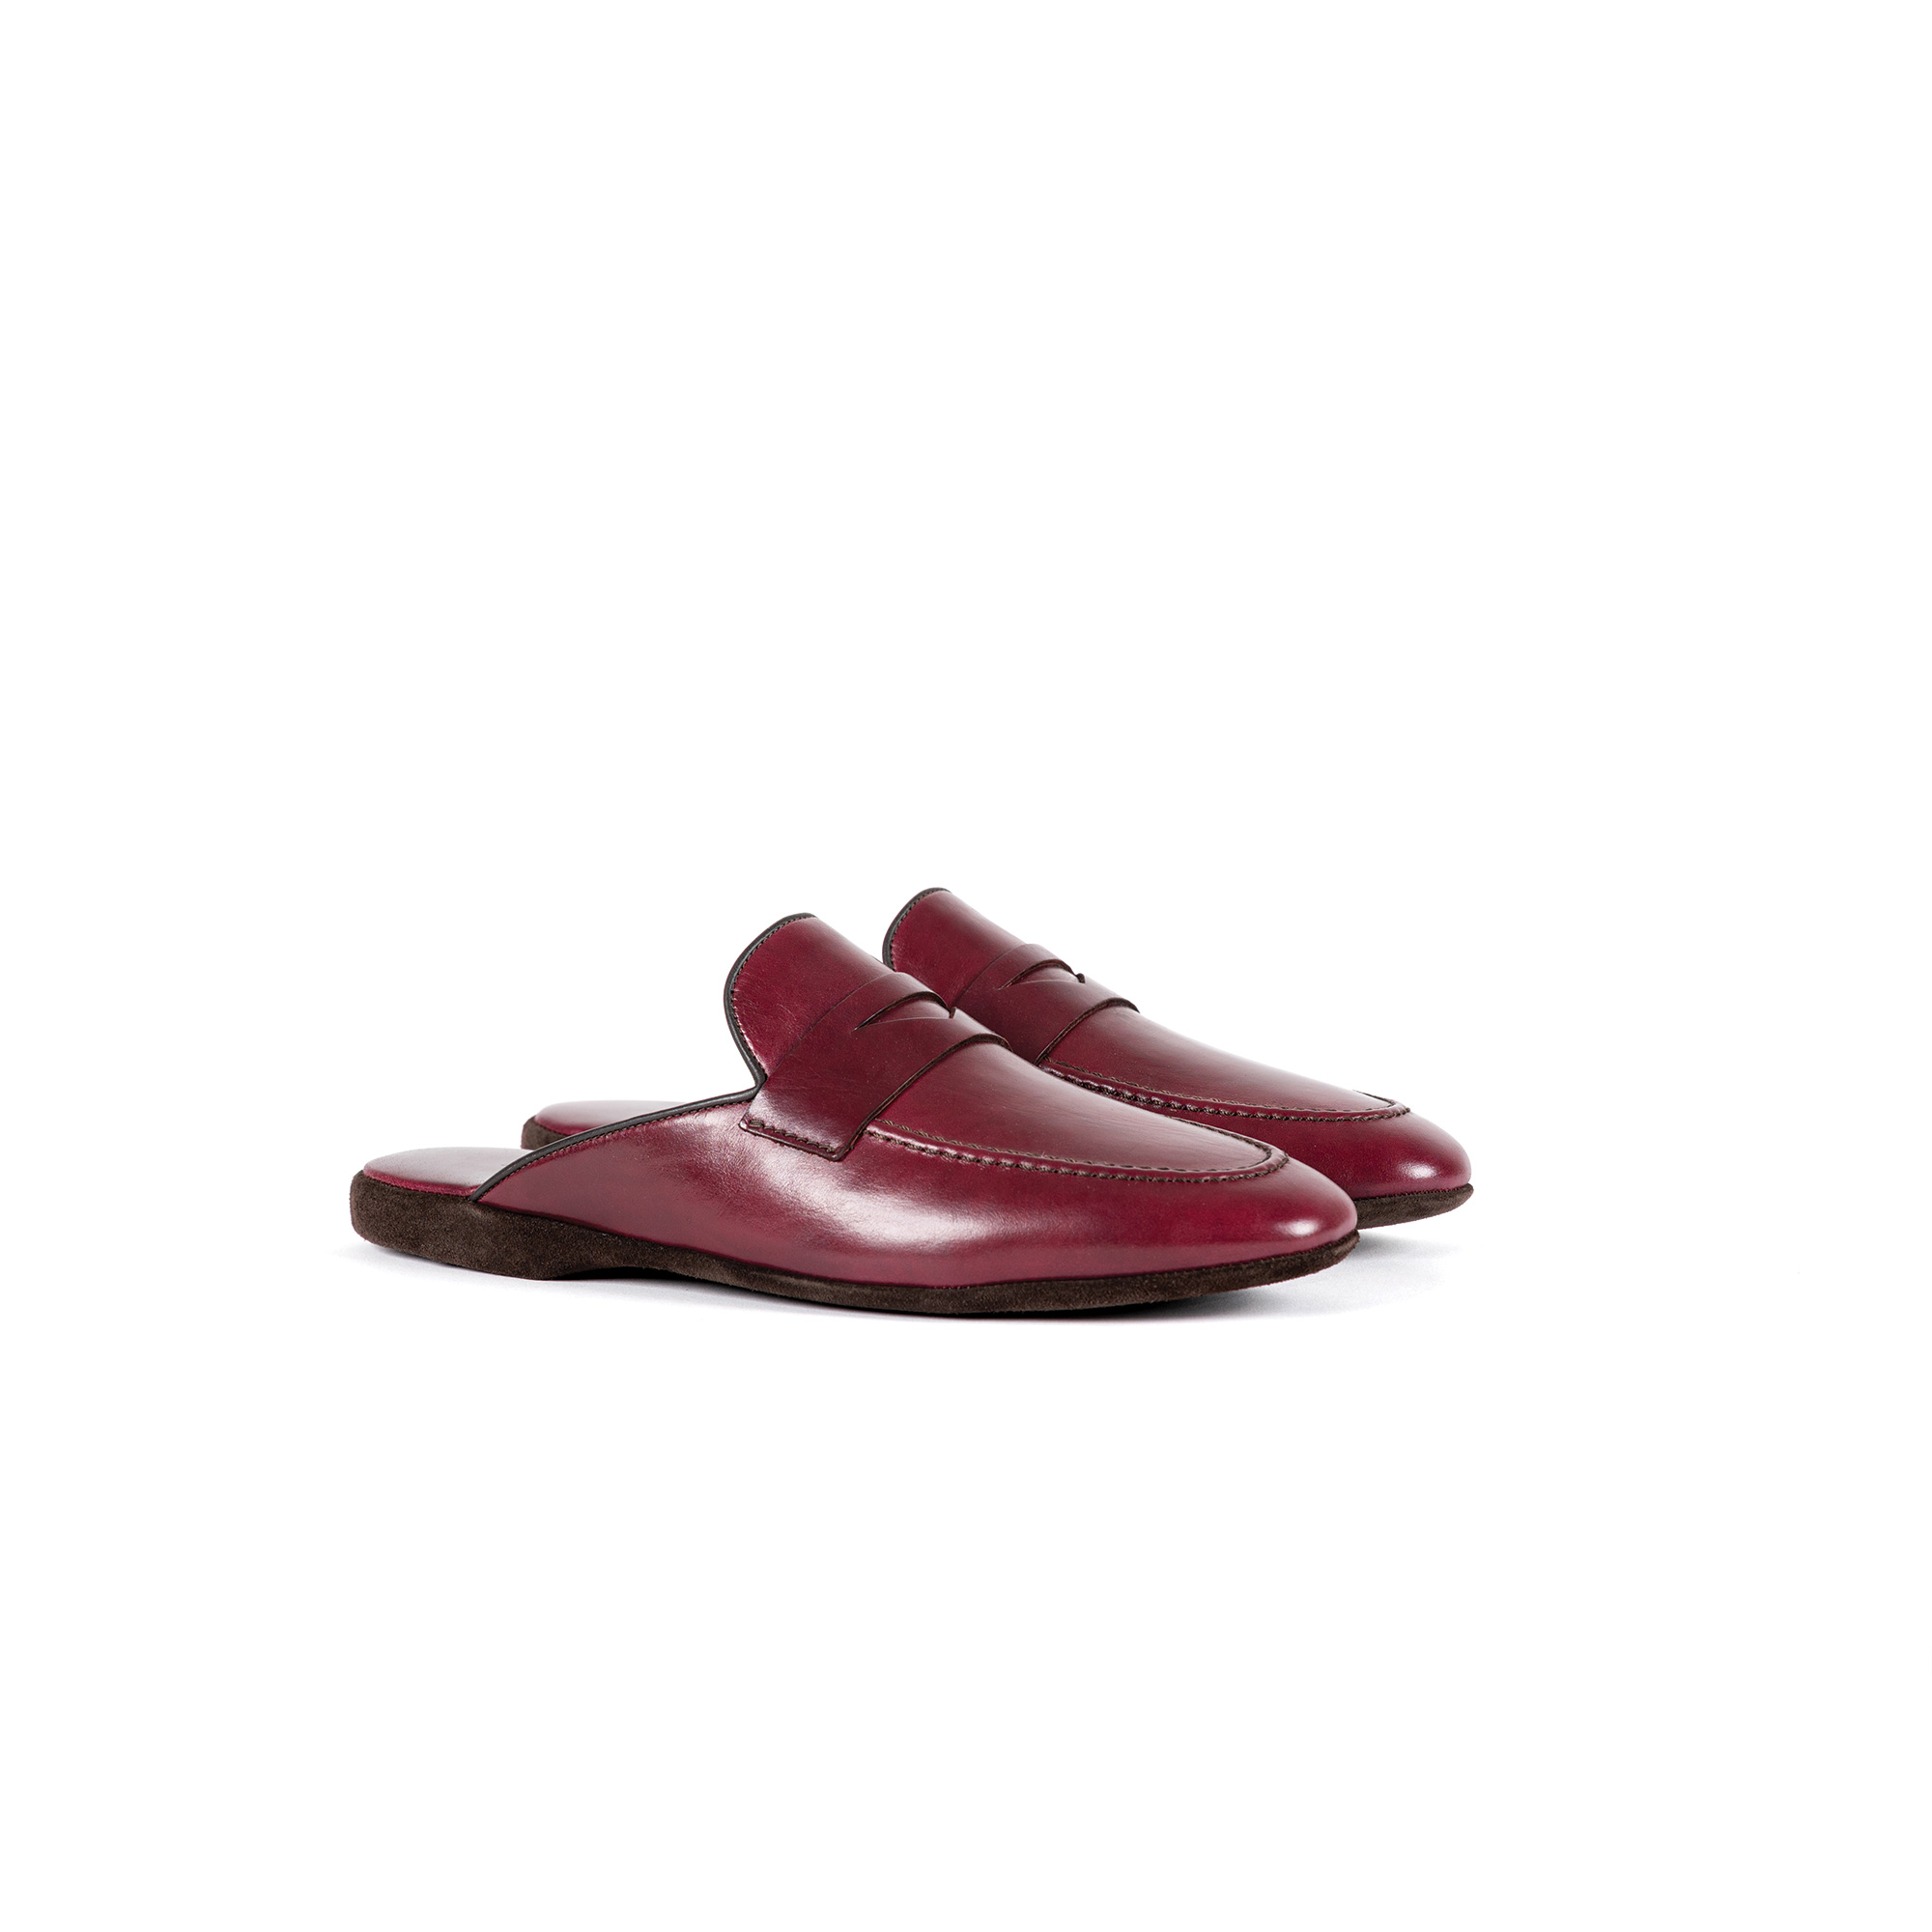 Pantofola interno classico in pelle vitello bordeaux - Farfalla italian slippers